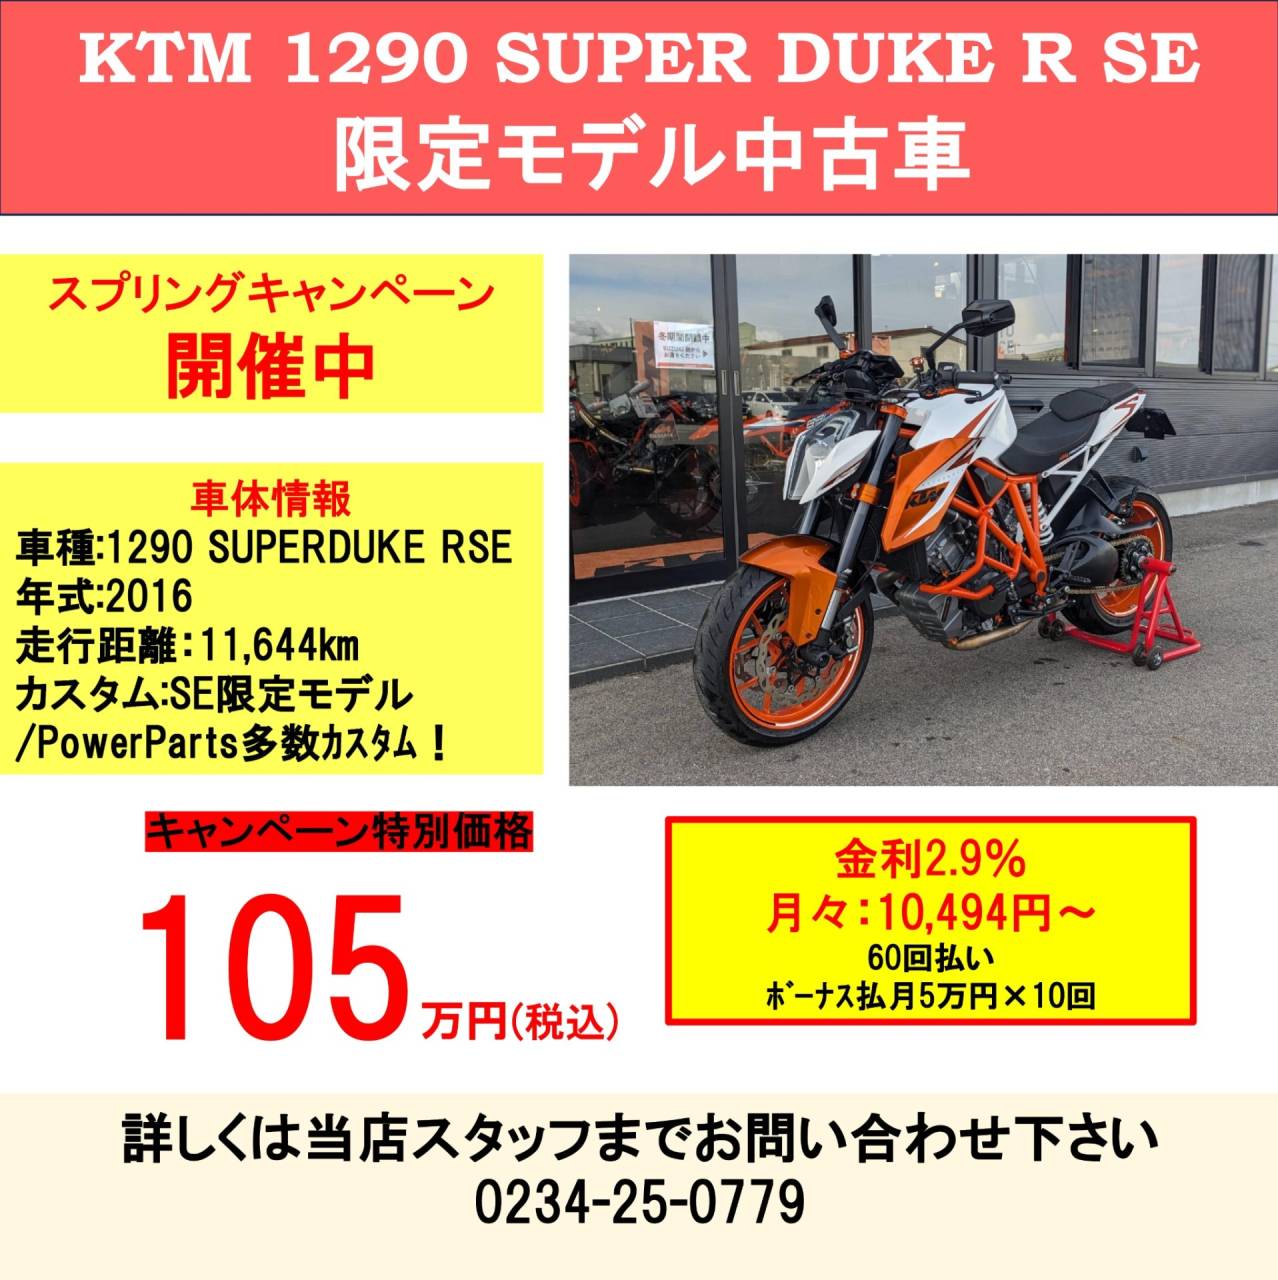 KTM 1290 SUPER DUKE R SE 中古車 KTM 山形